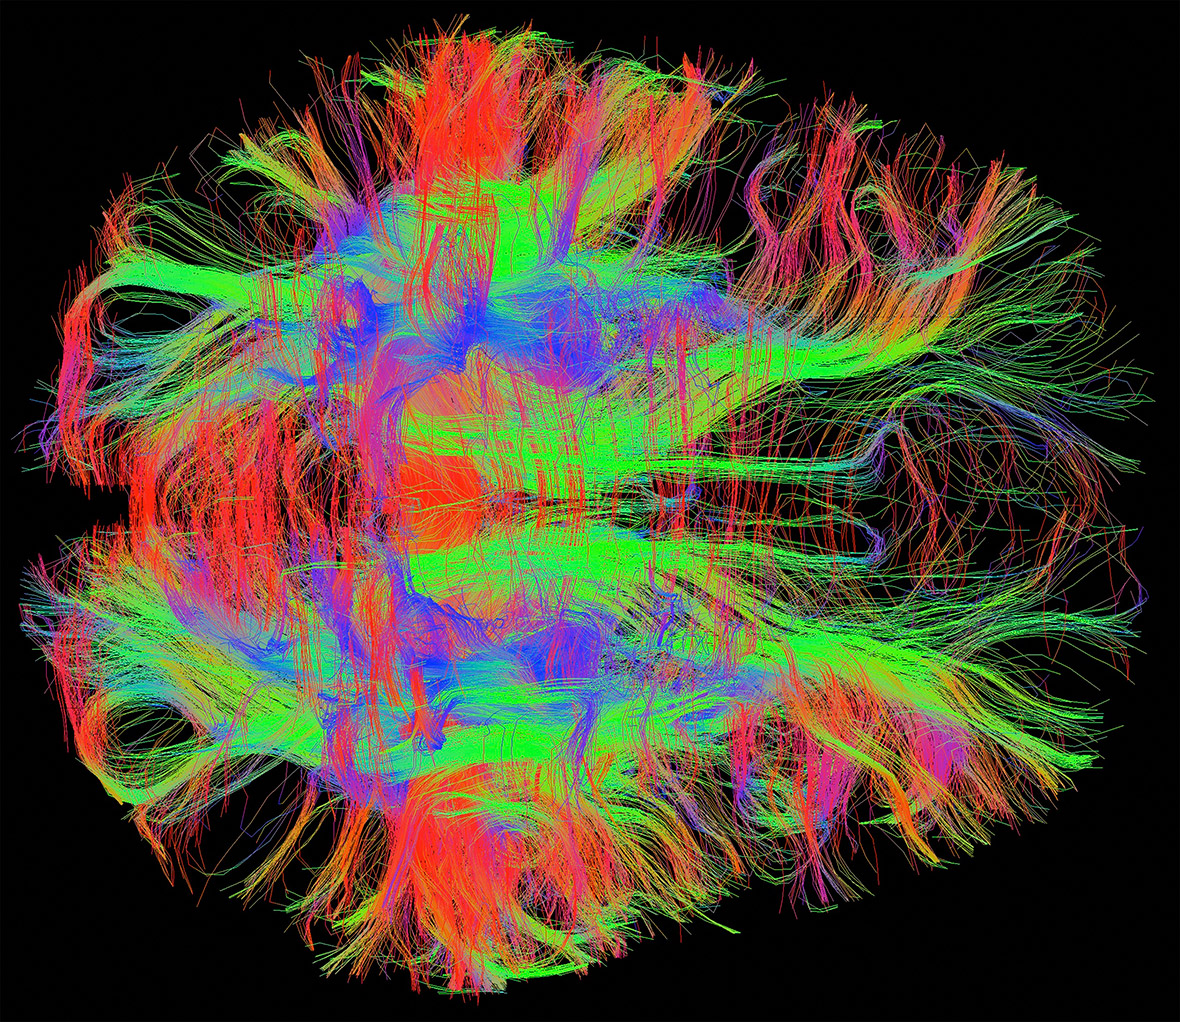 Nerve fibres in a healthy adult human brain, MRI